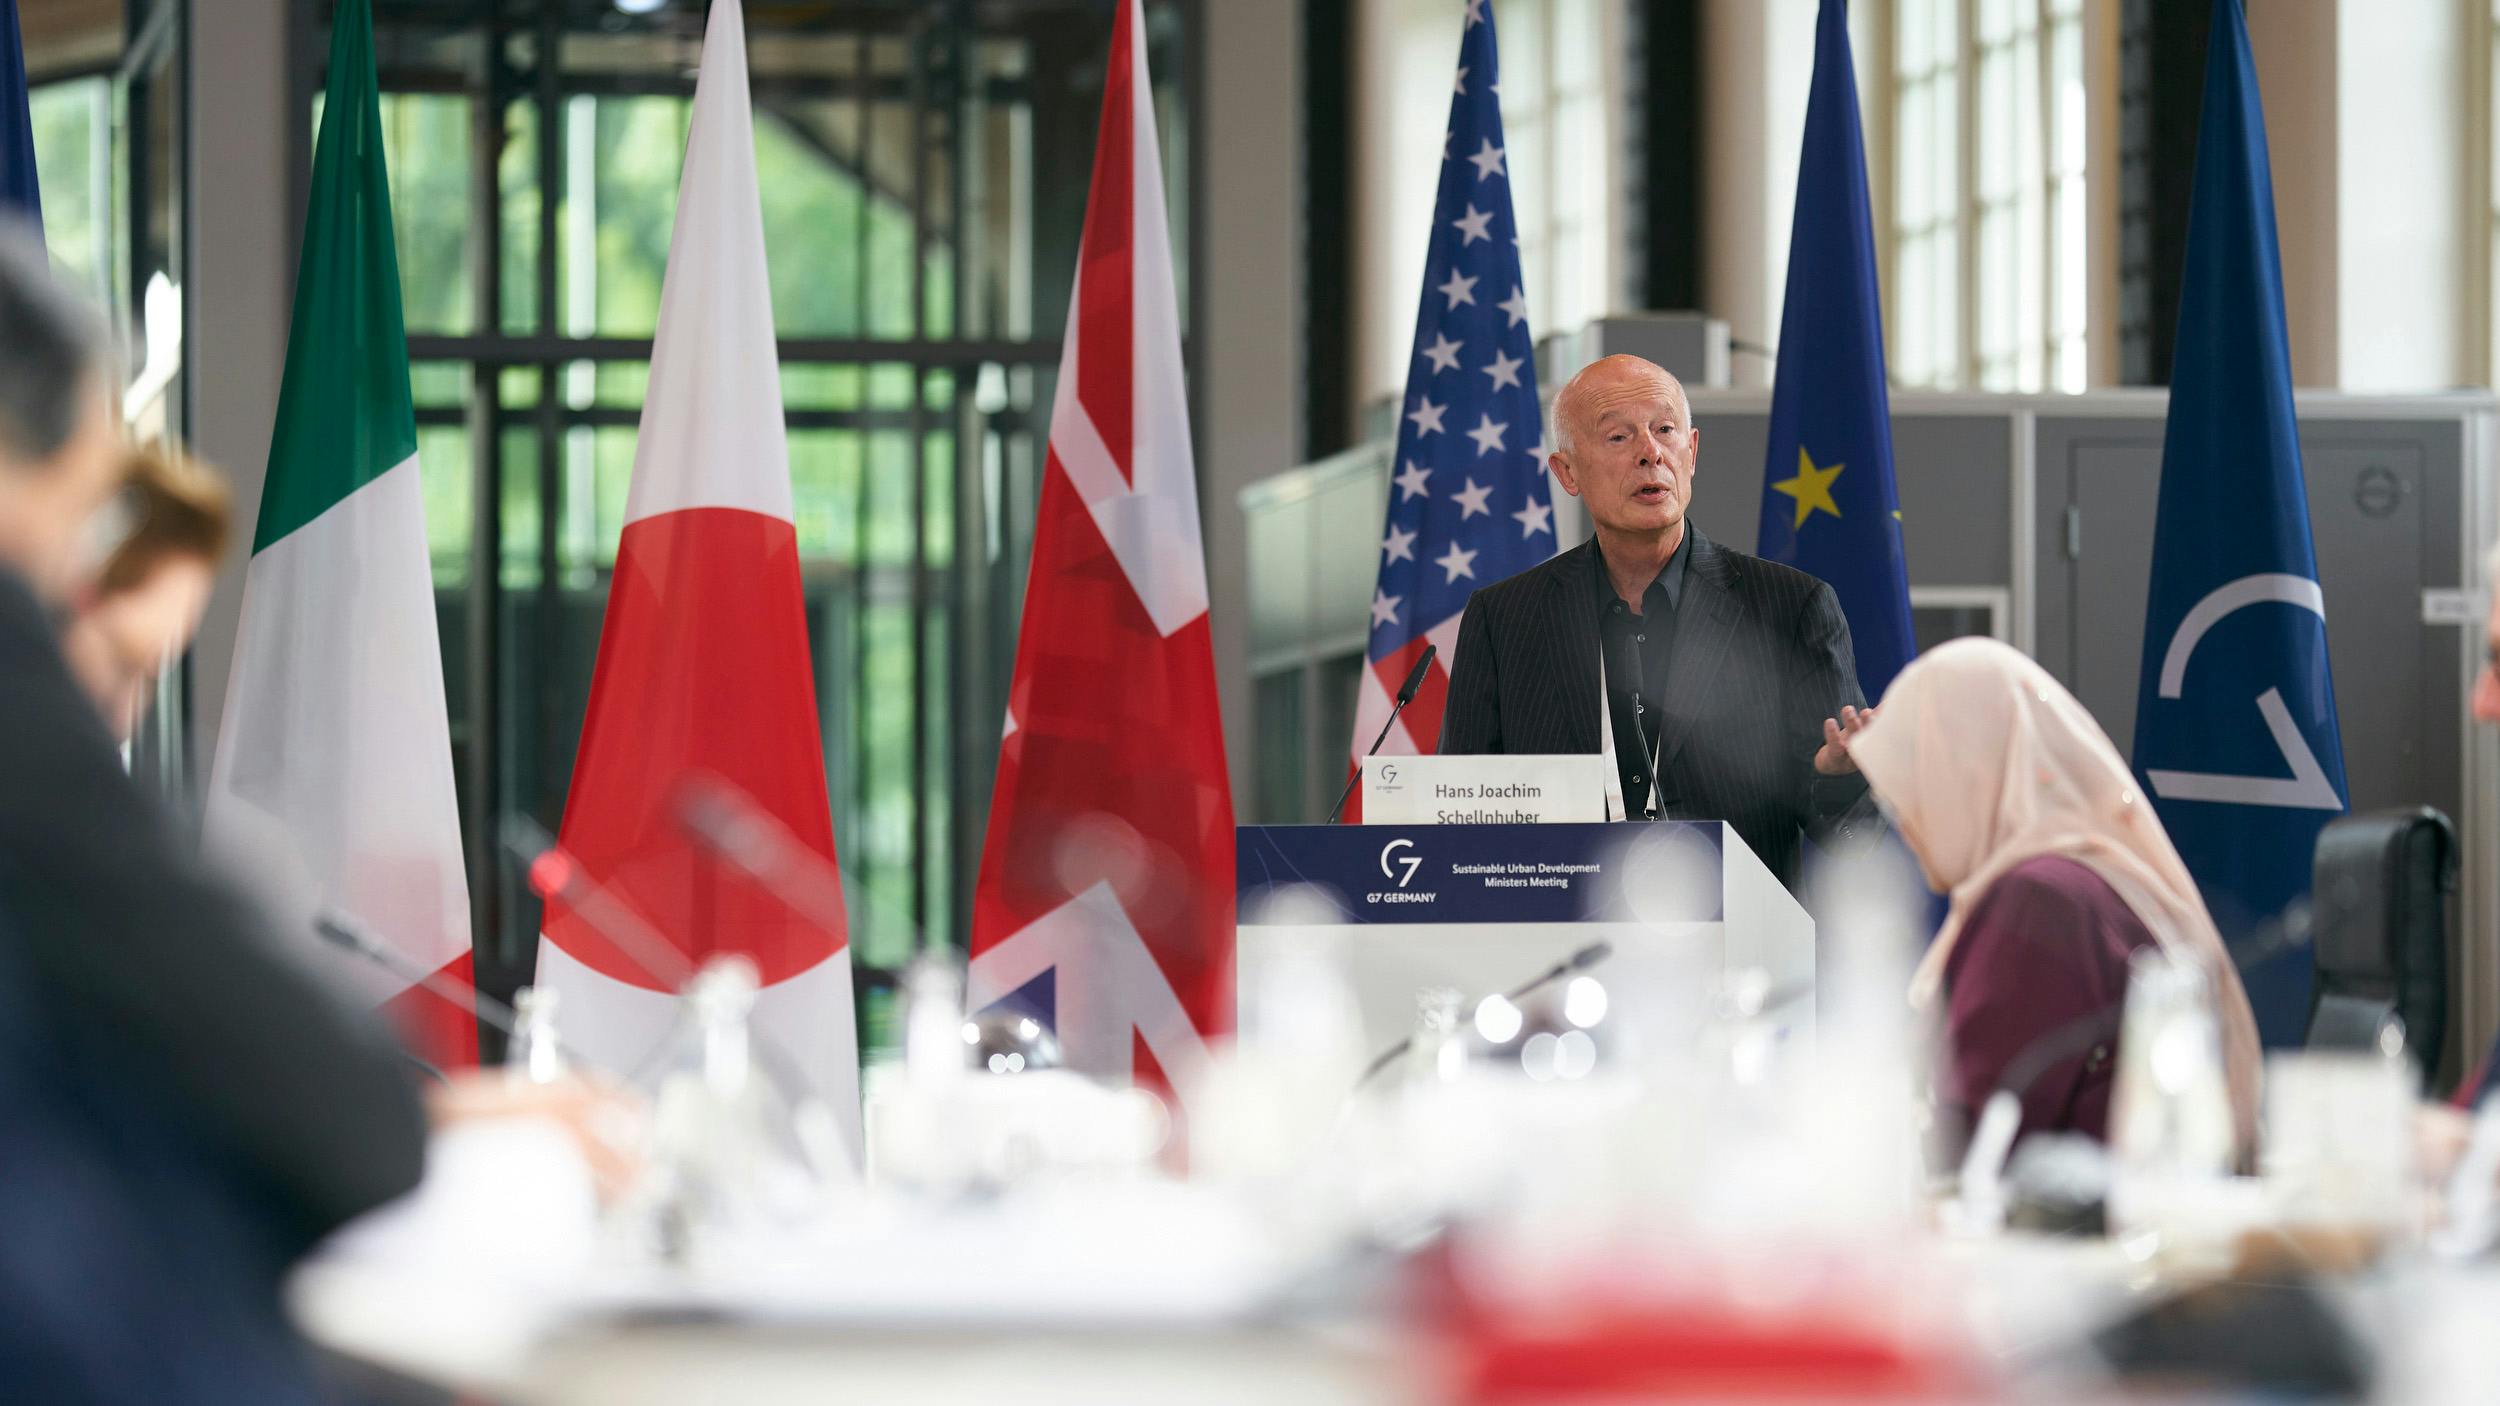 Hans Joachim Schellnhuber Speaks at G7 Meeting in Potsdam